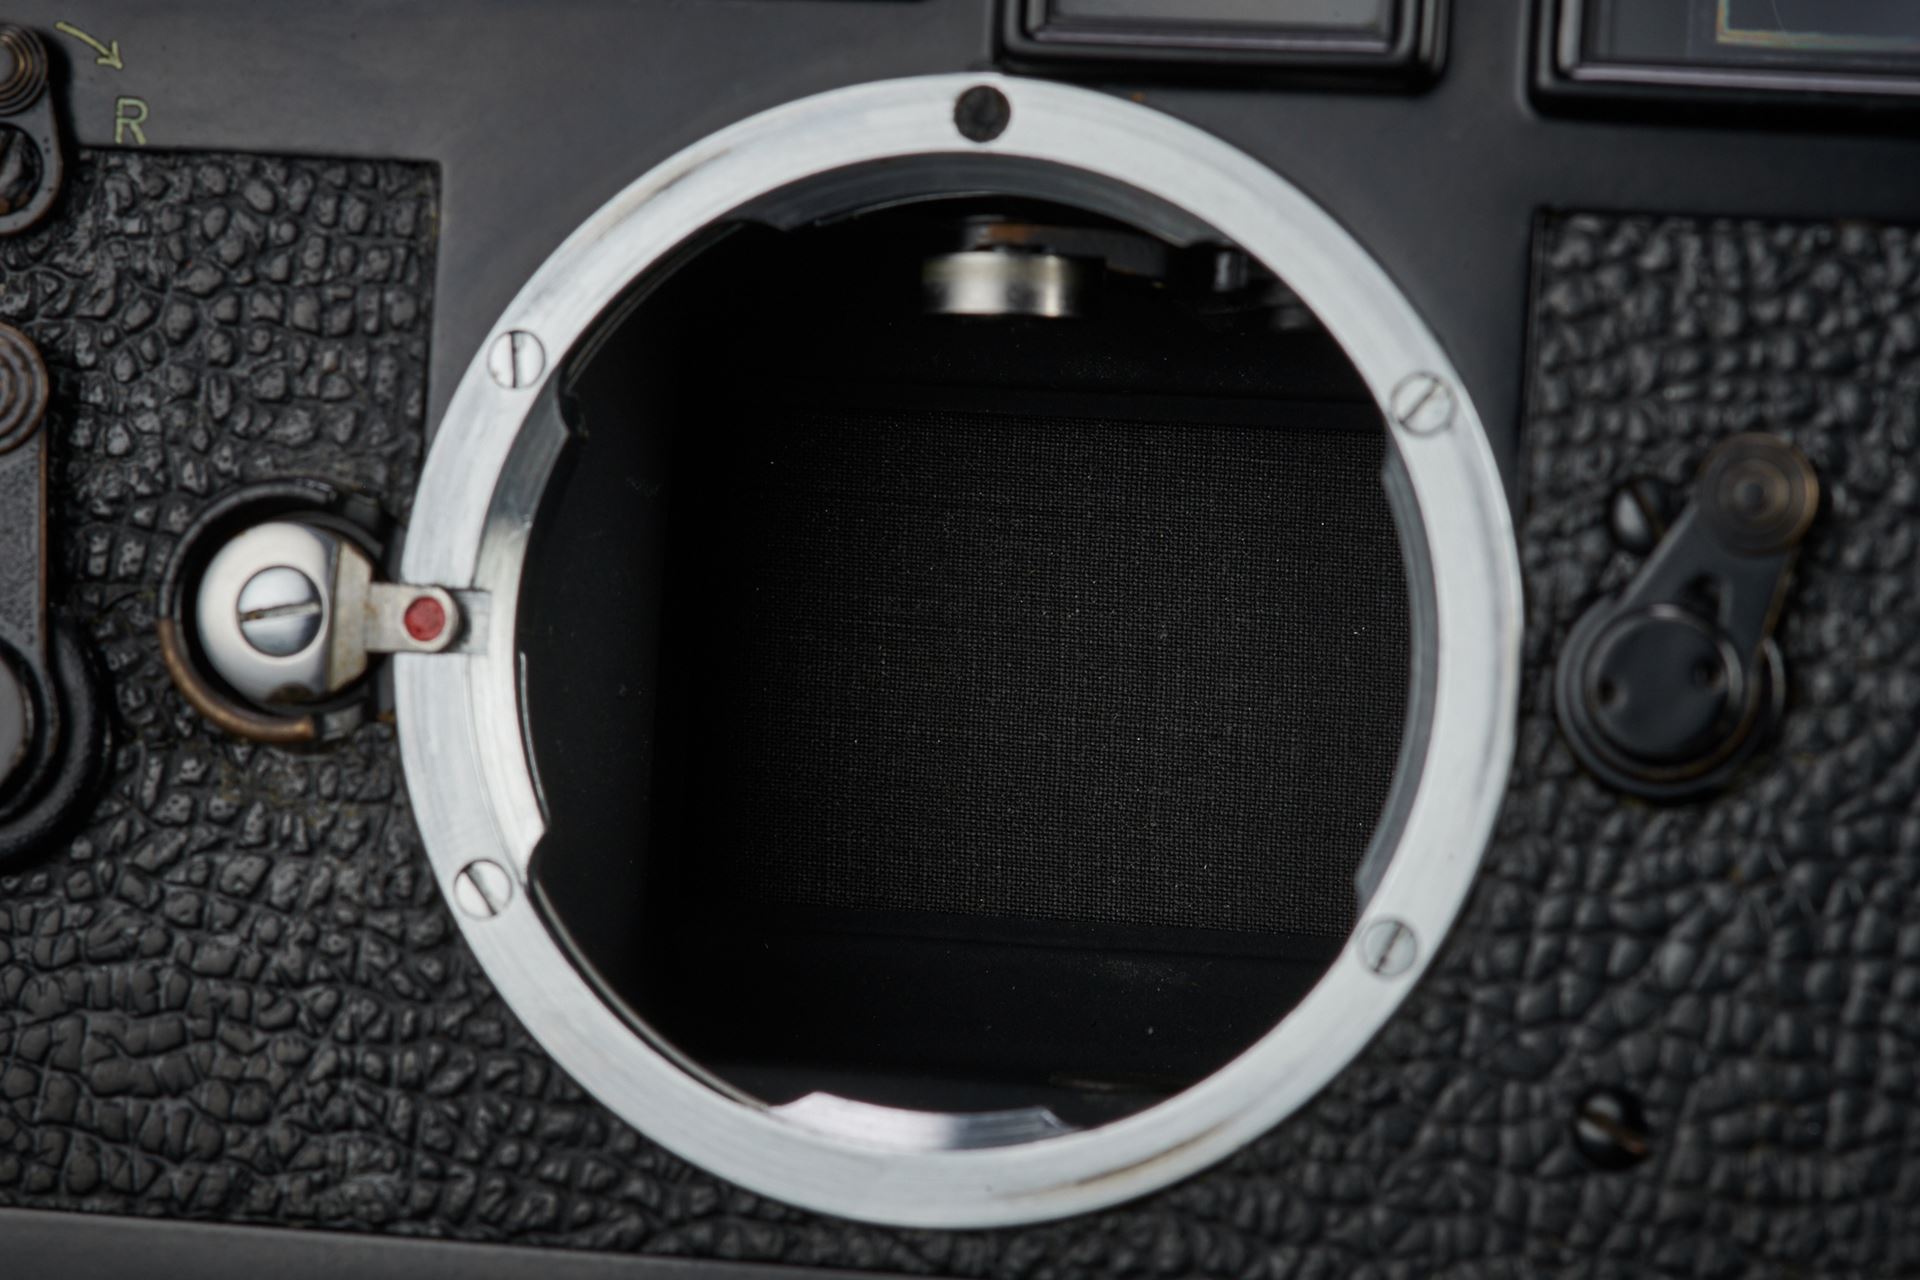 Picture of Leica M3 Original Black Paint w/ Leica Rigid Summicron 50mm f/2 Black Paint